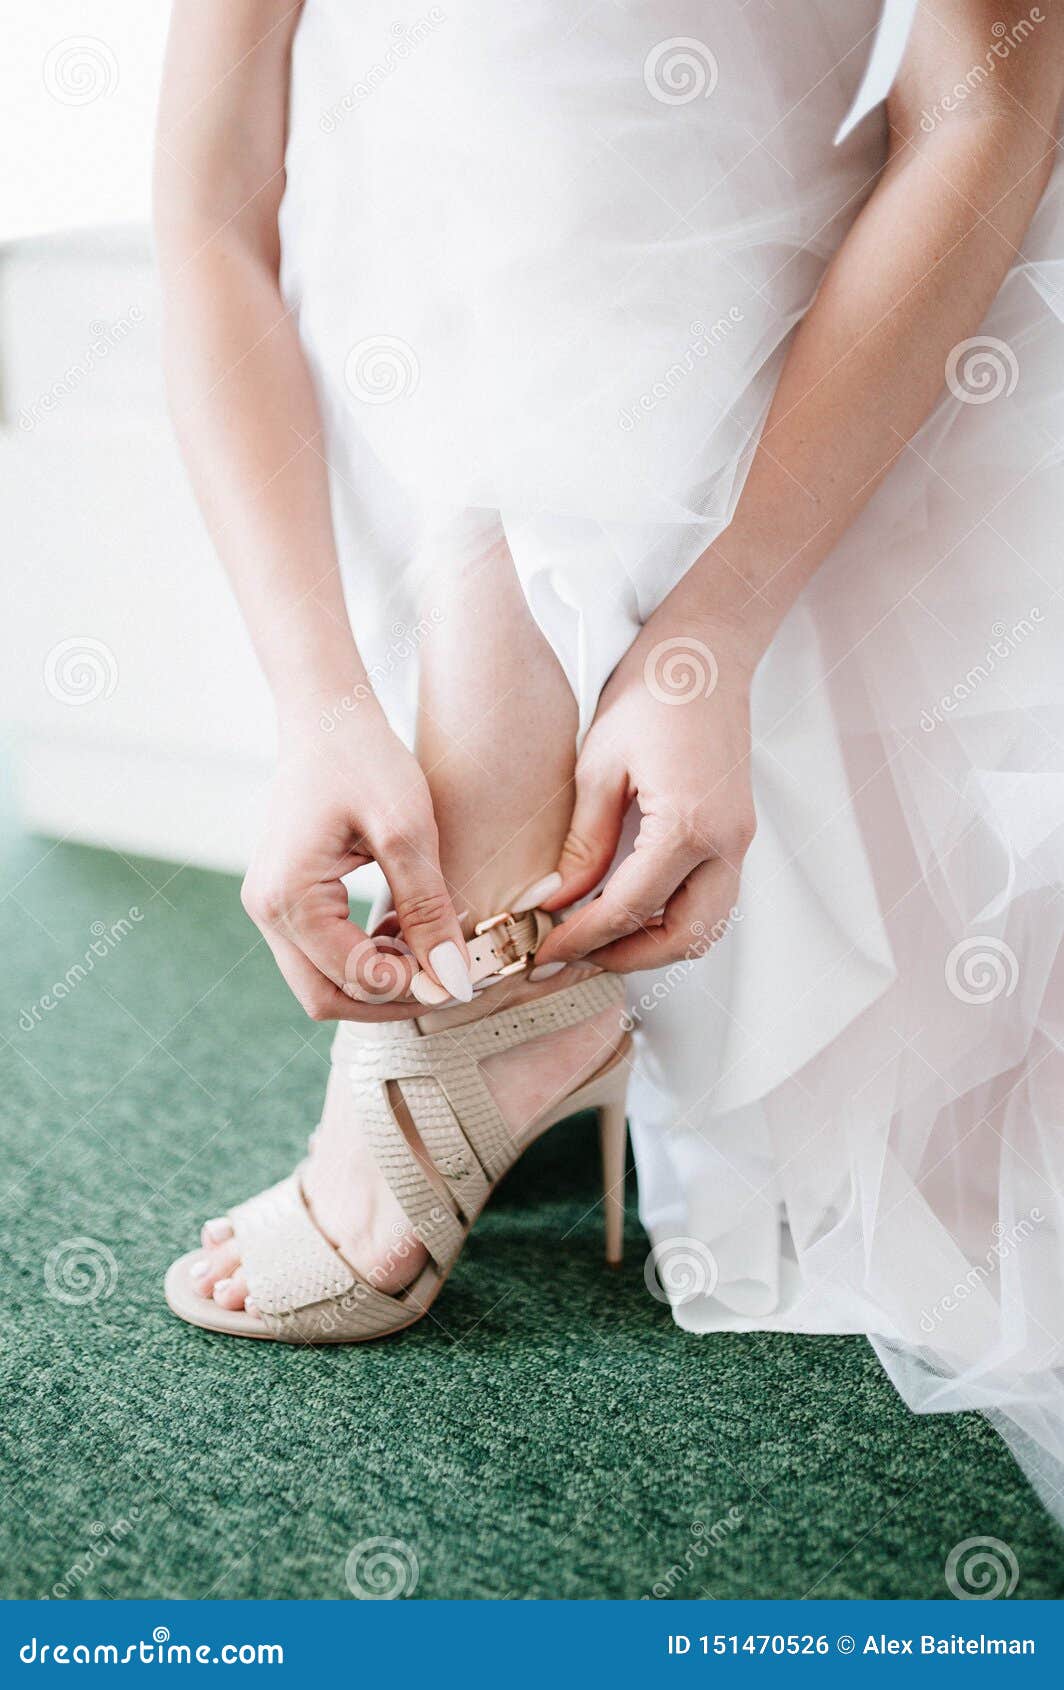 Page 4 | Wedding Footwear Images - Free Download on Freepik